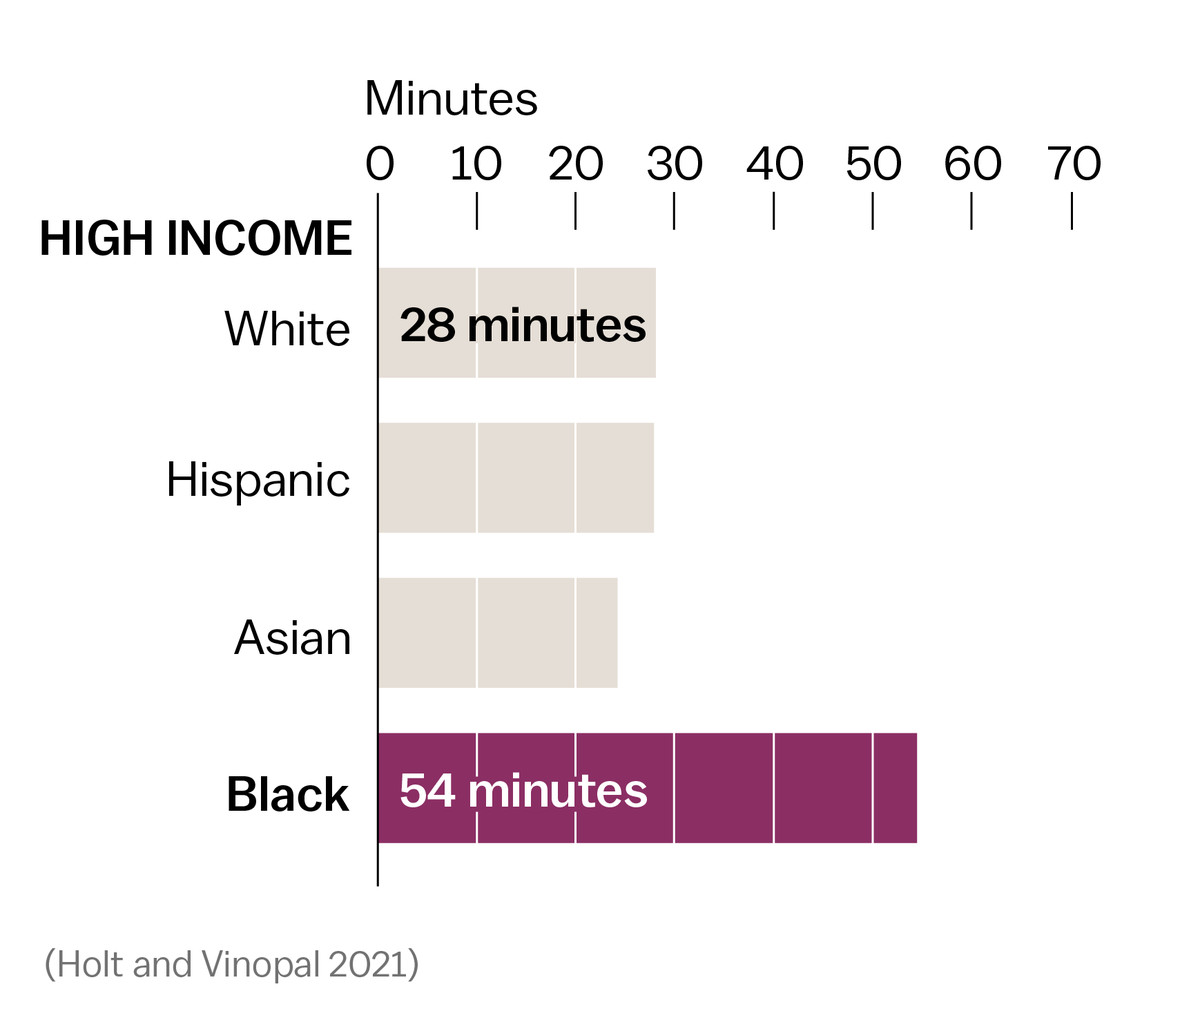 High income people wait less, a chart shows. But rich Black people wait longest.